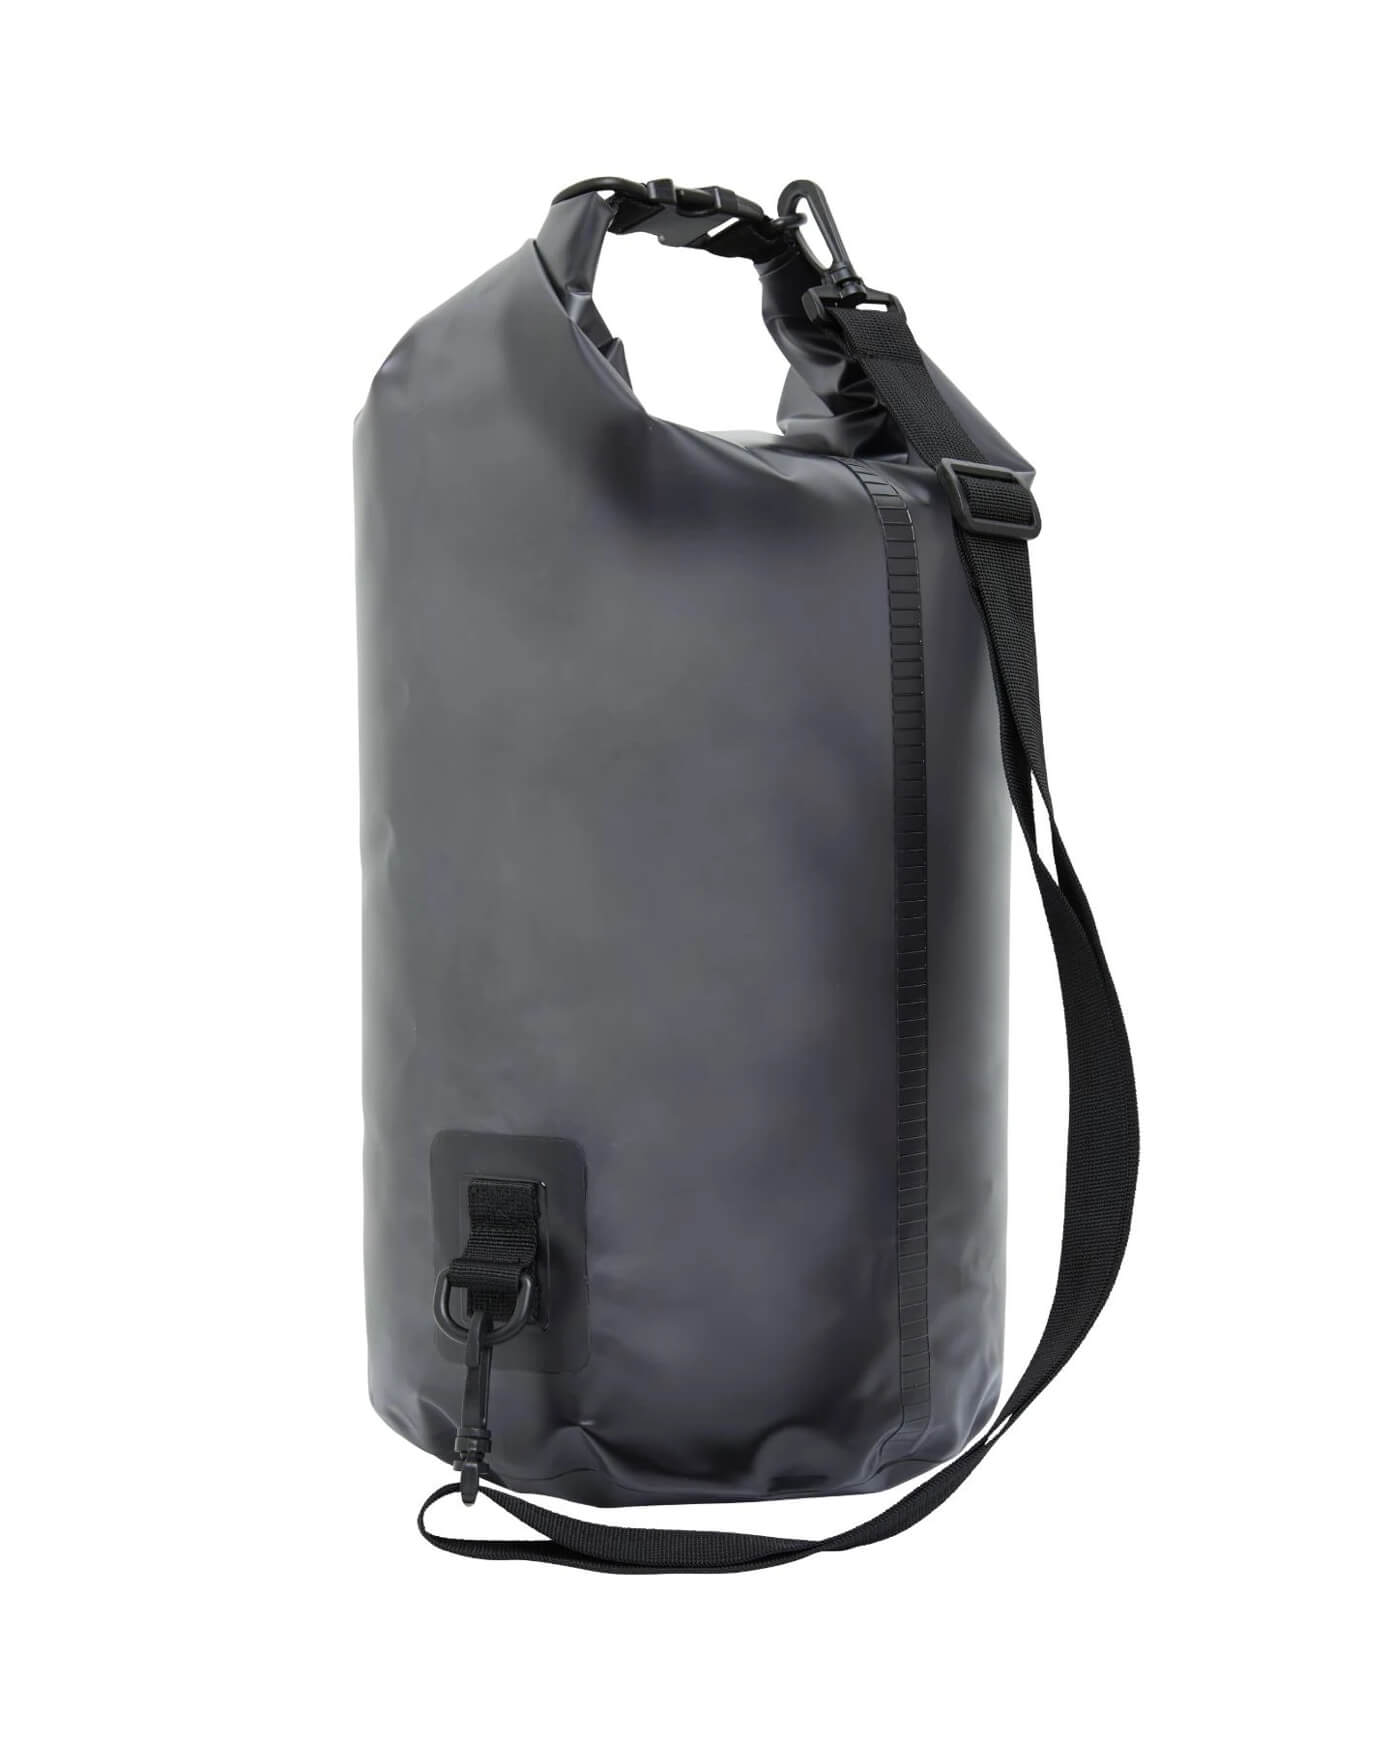 Buy Wetsuit Dry Bag - Black by O'Neill online - O'Neill Australia